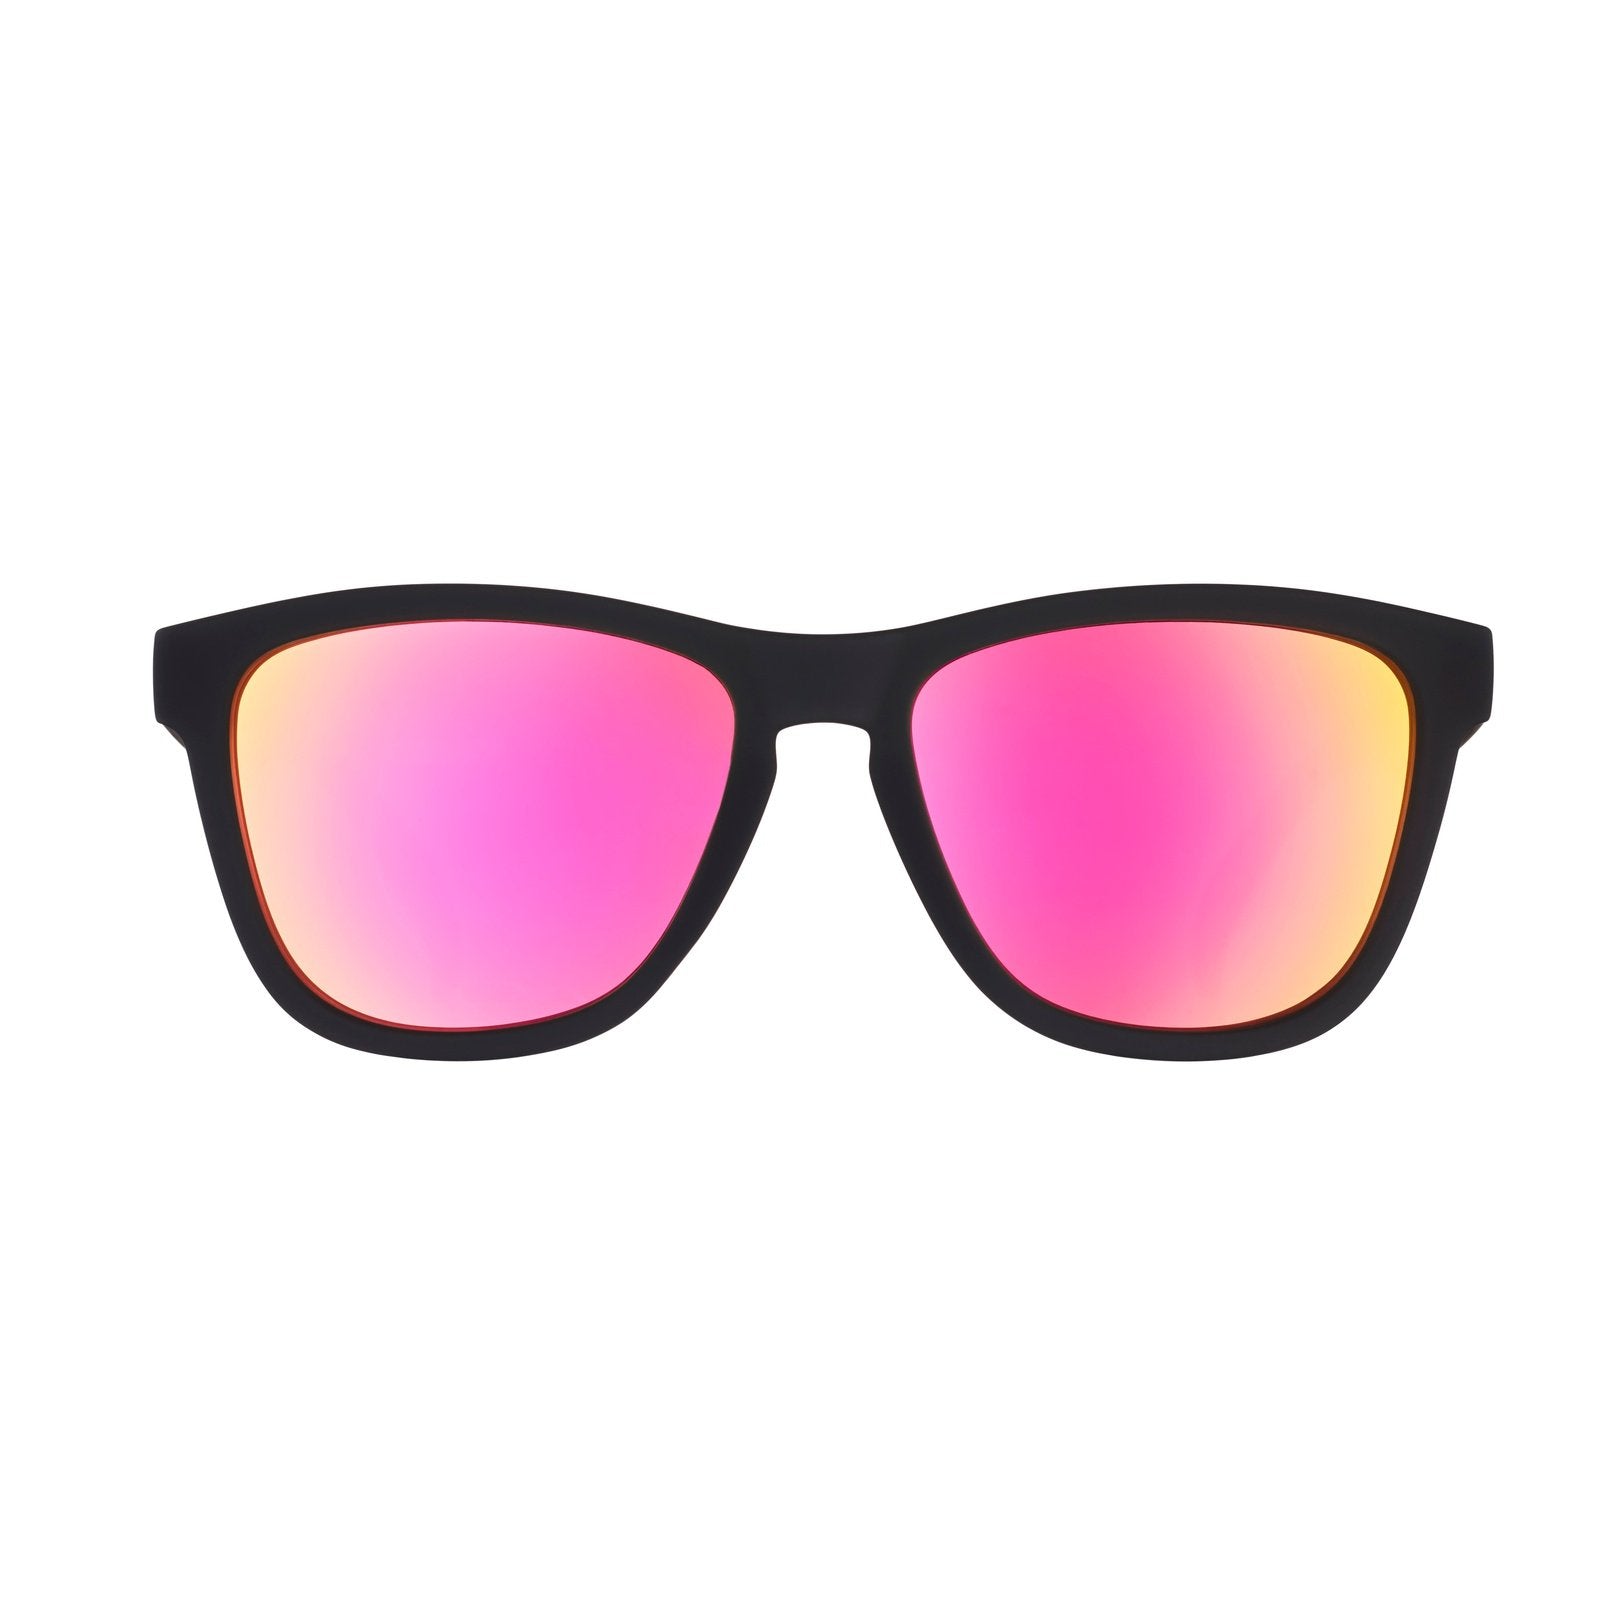 "Professional Respawner” OG Polarized Sunglasses Goodr